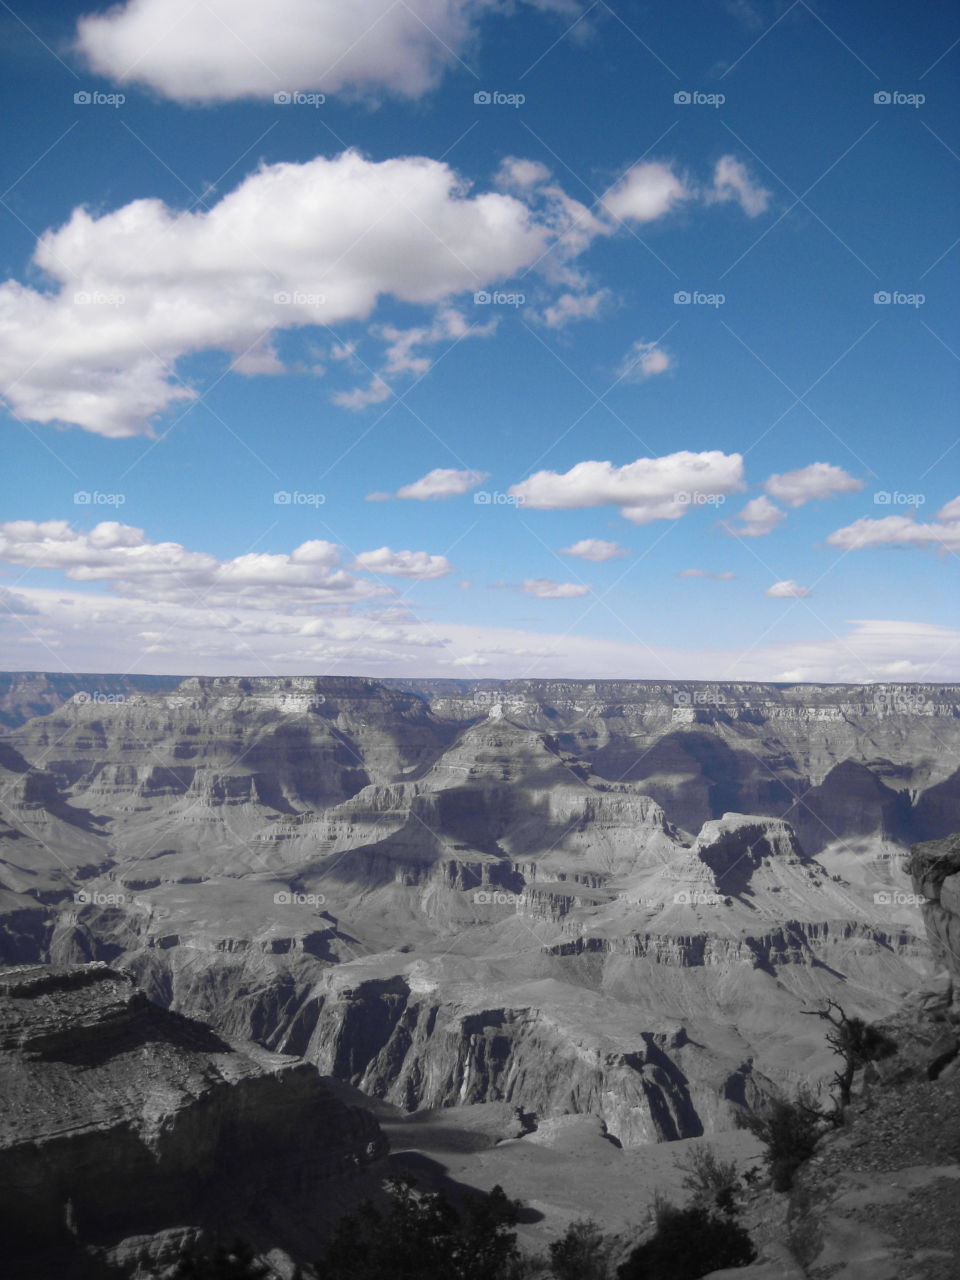 Grand Canyon. South rim of the Grand Canyon